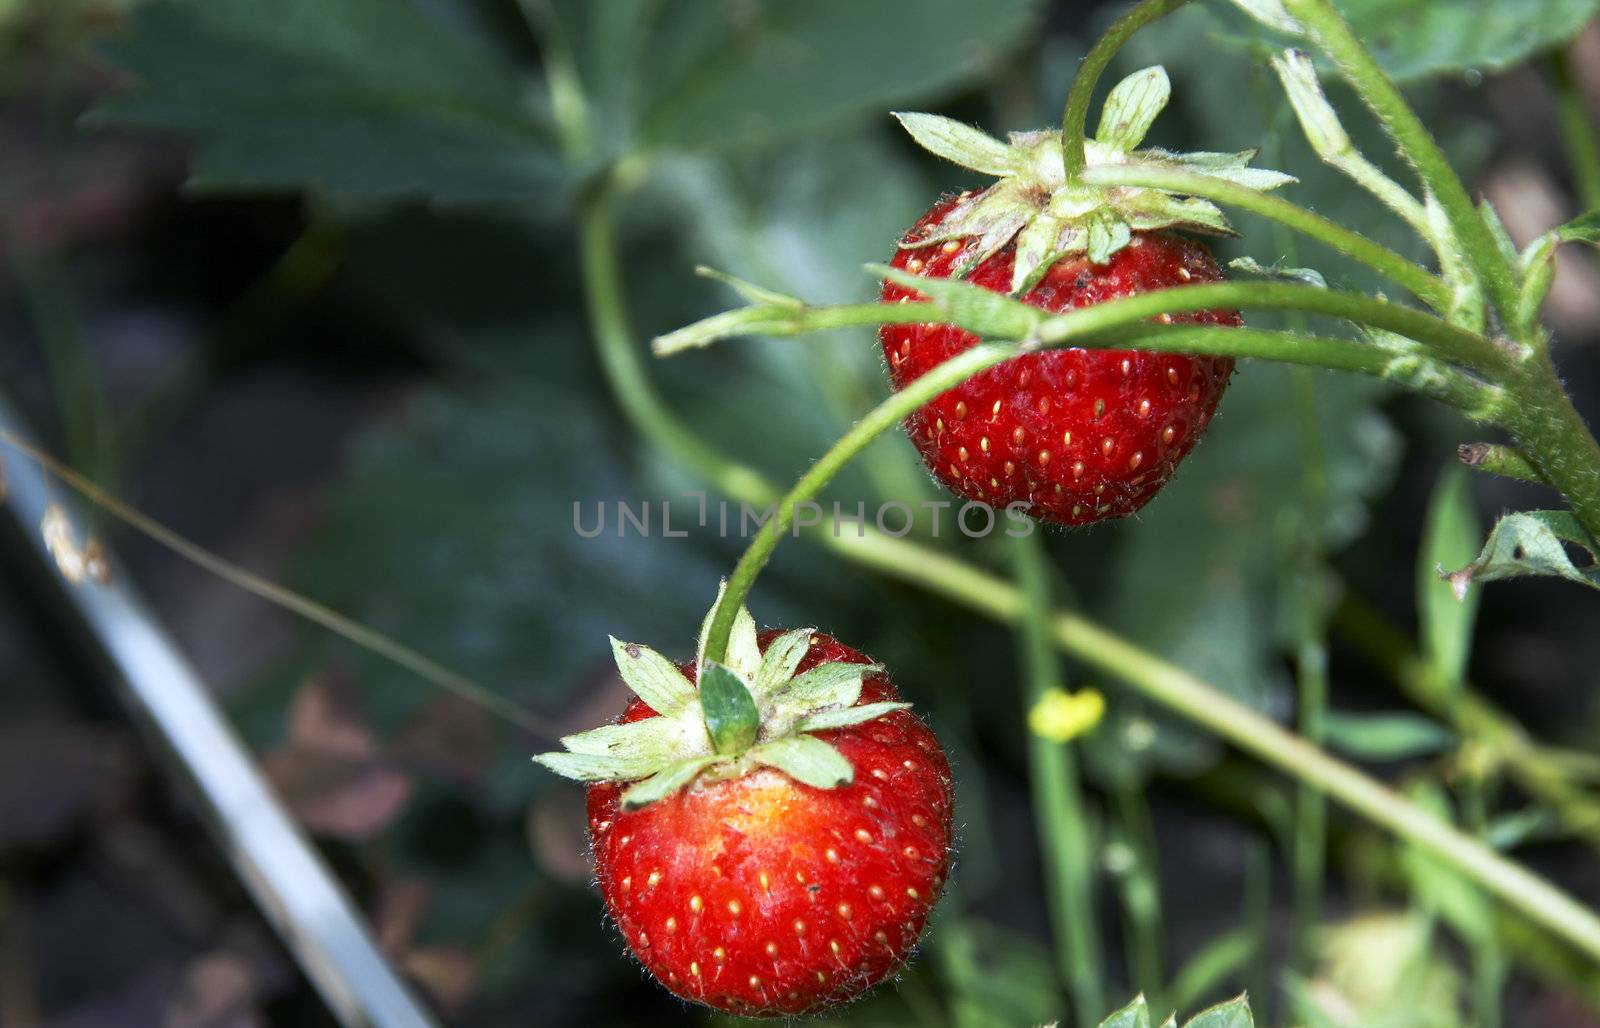 Strawberry by Dominator